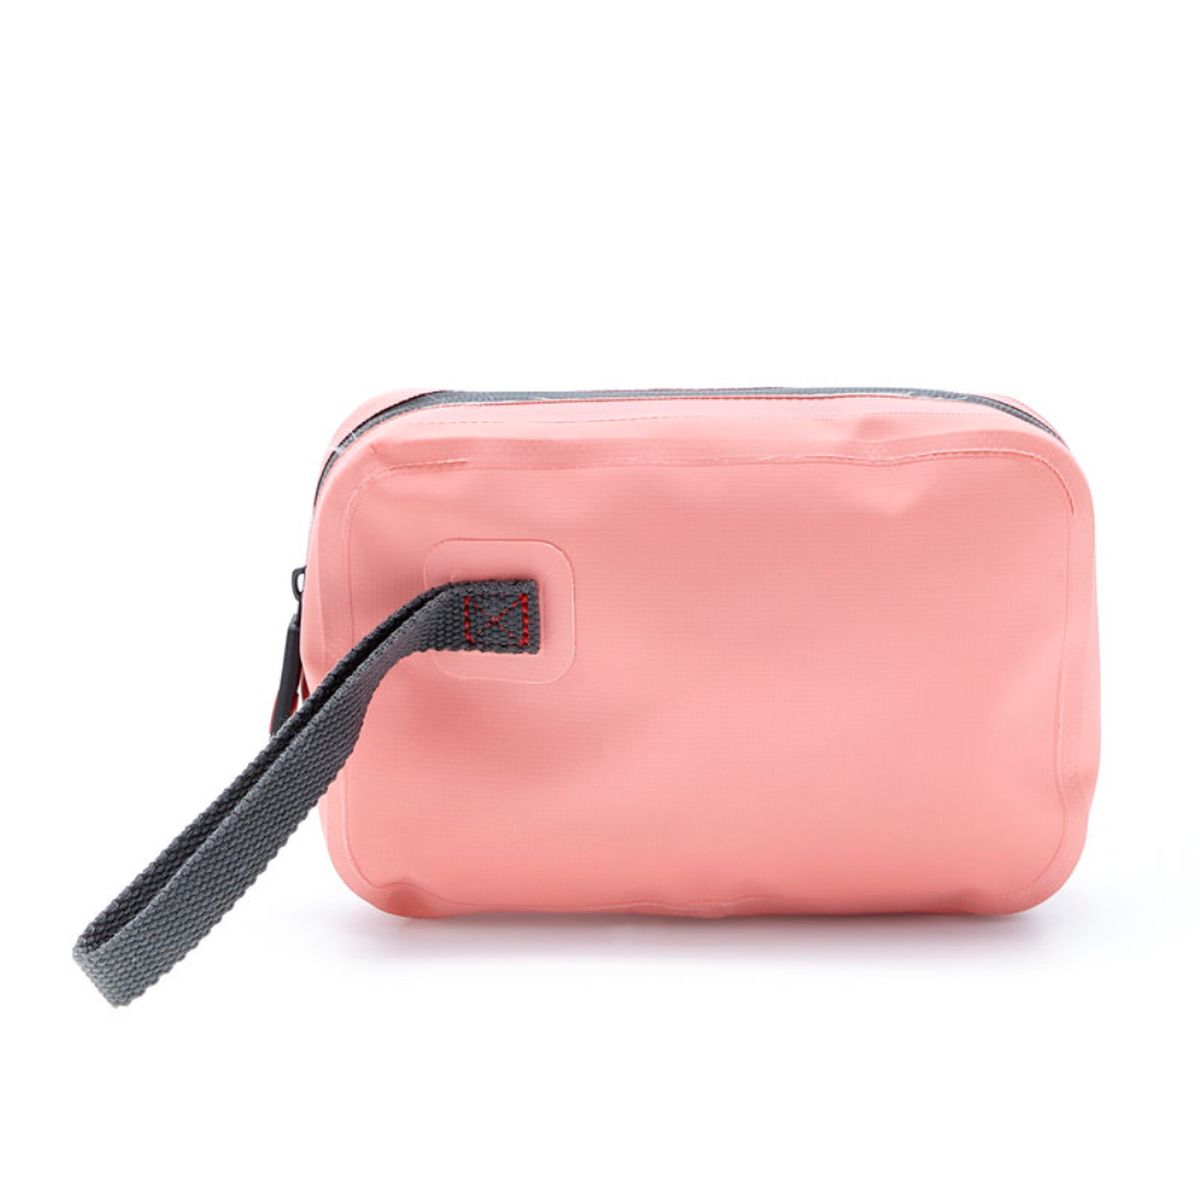 Waterproof pouch 1 liter - Pink